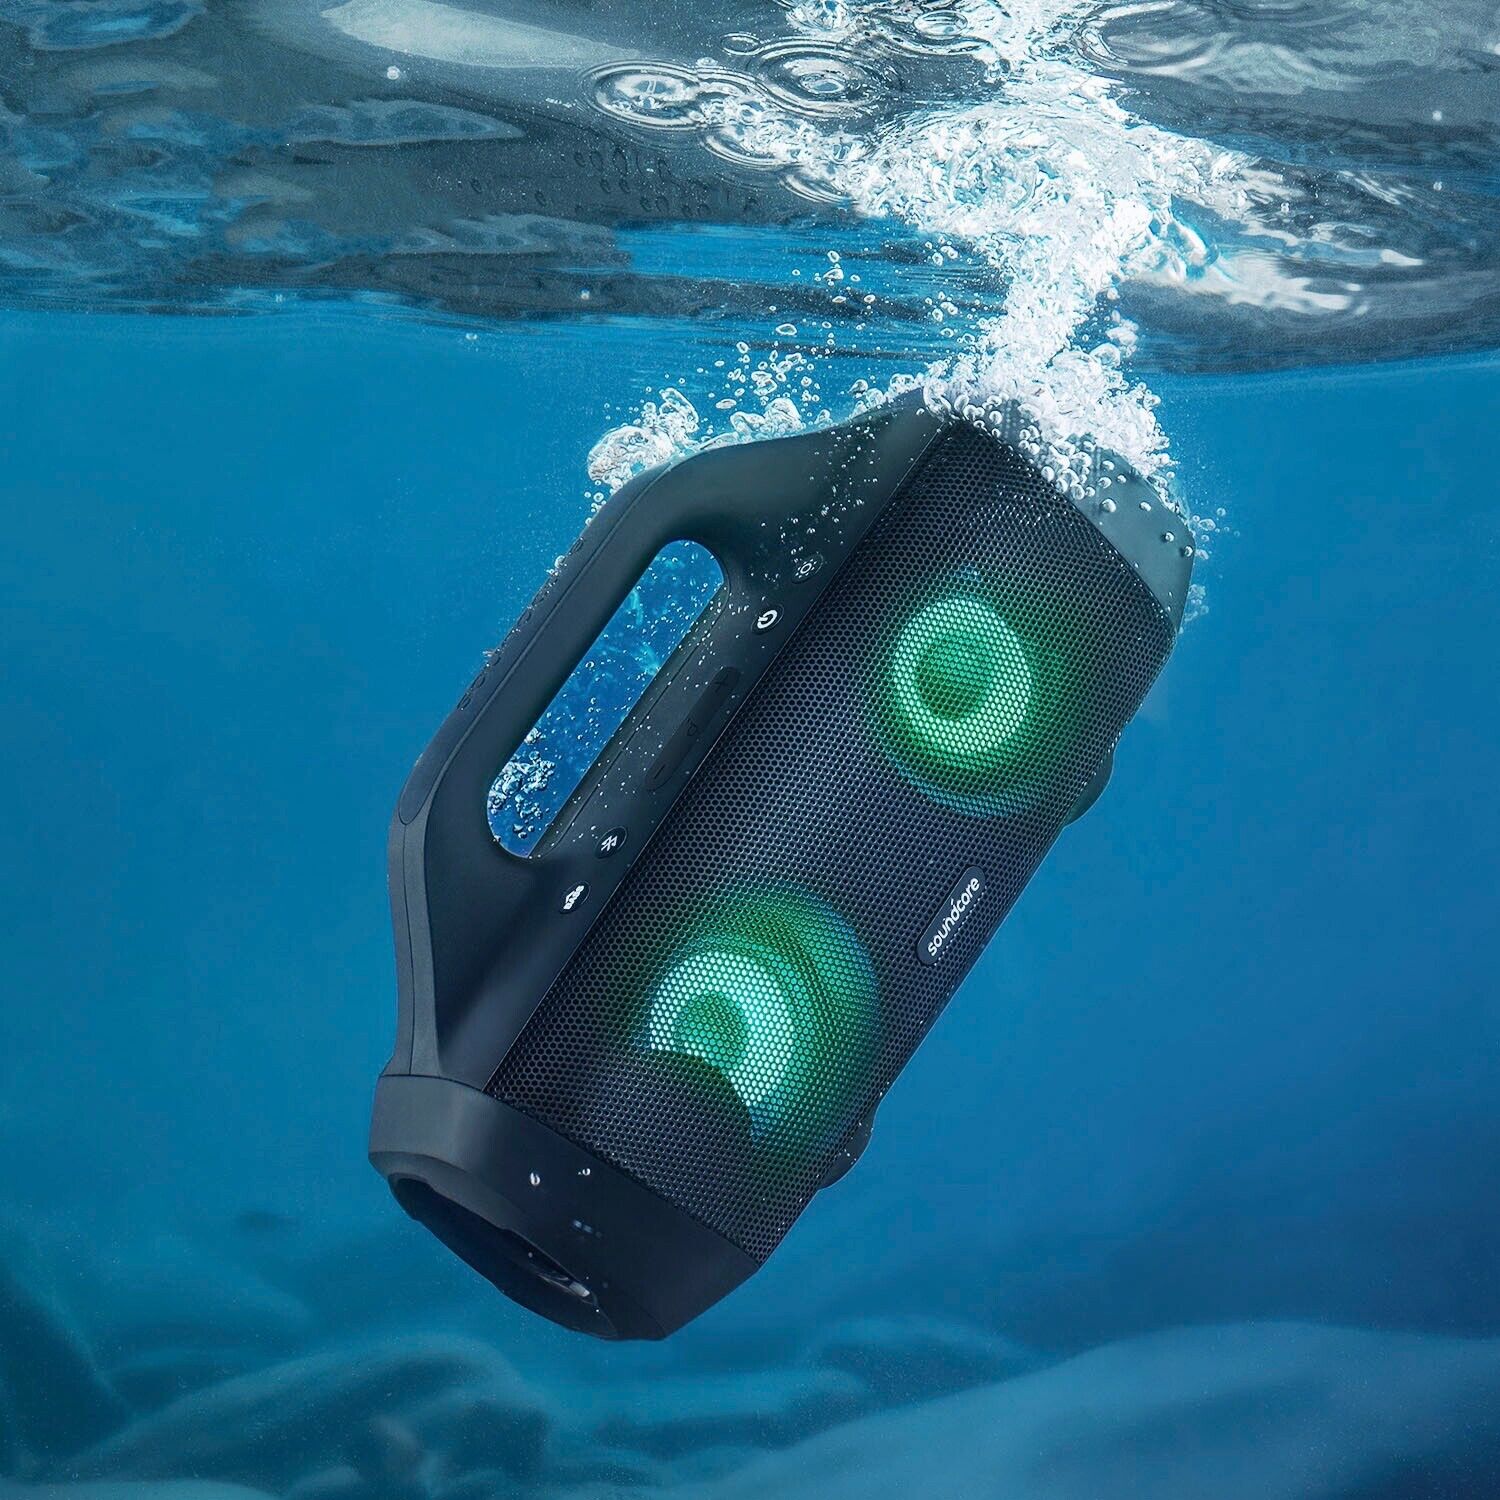 Soundcore Anker Select Pro Portable Waterproof Bluetooth Speaker - Black